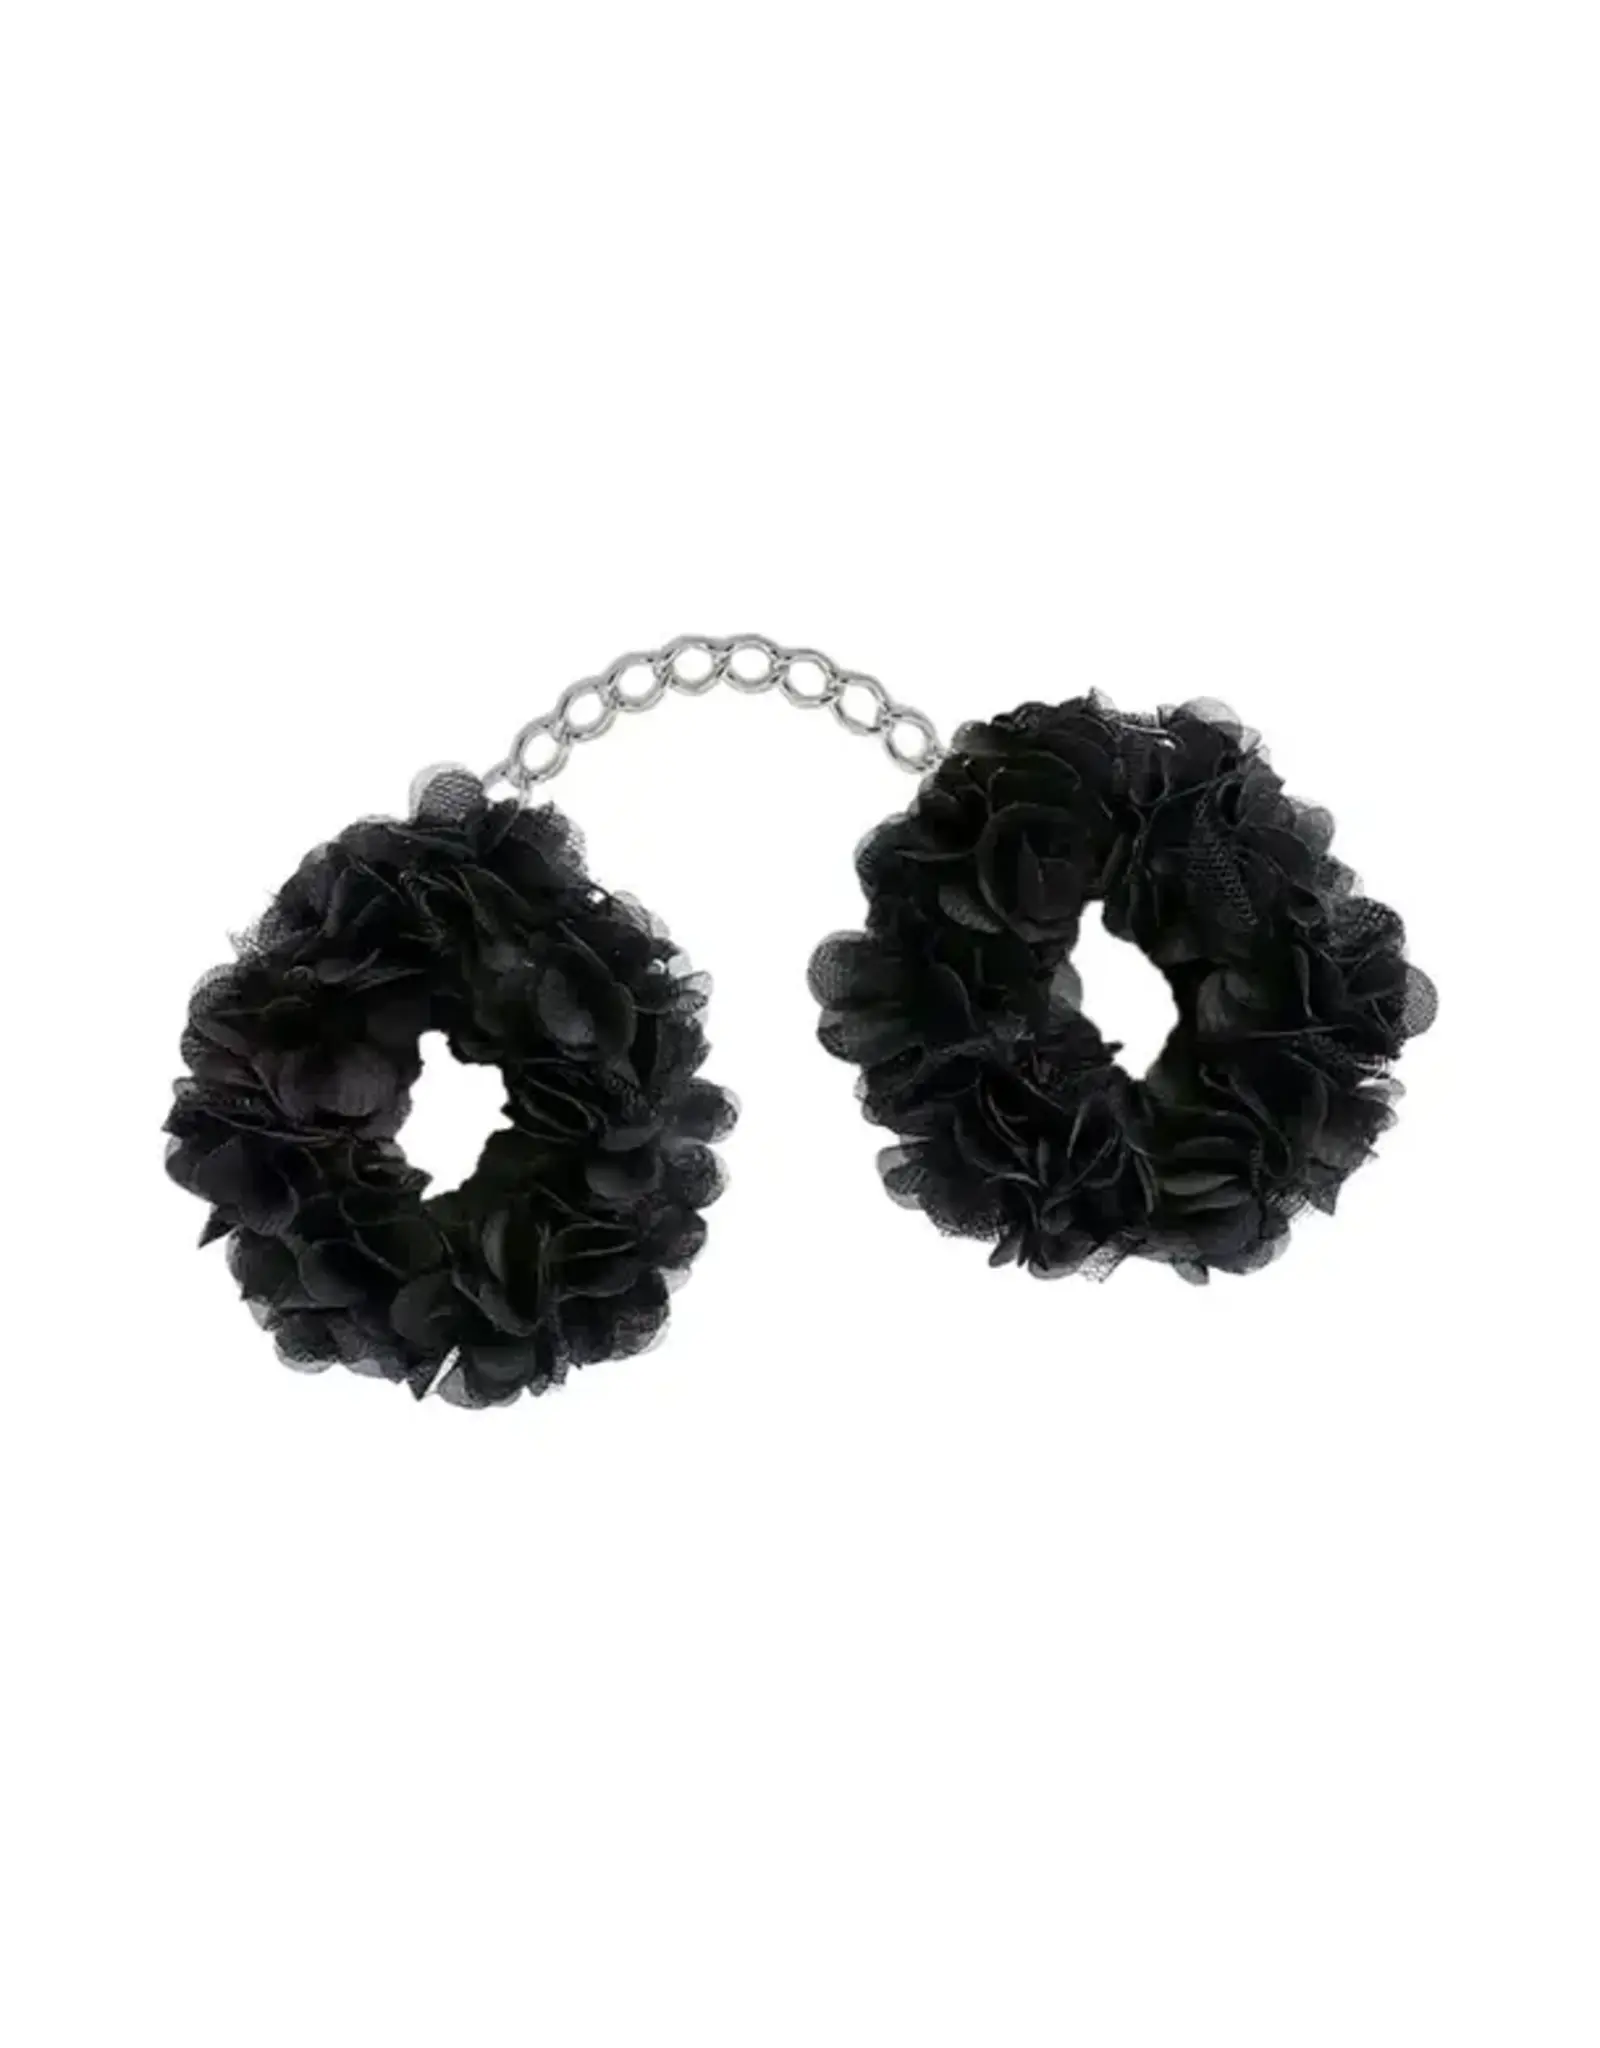 Blossom Luv Cuffs - Black